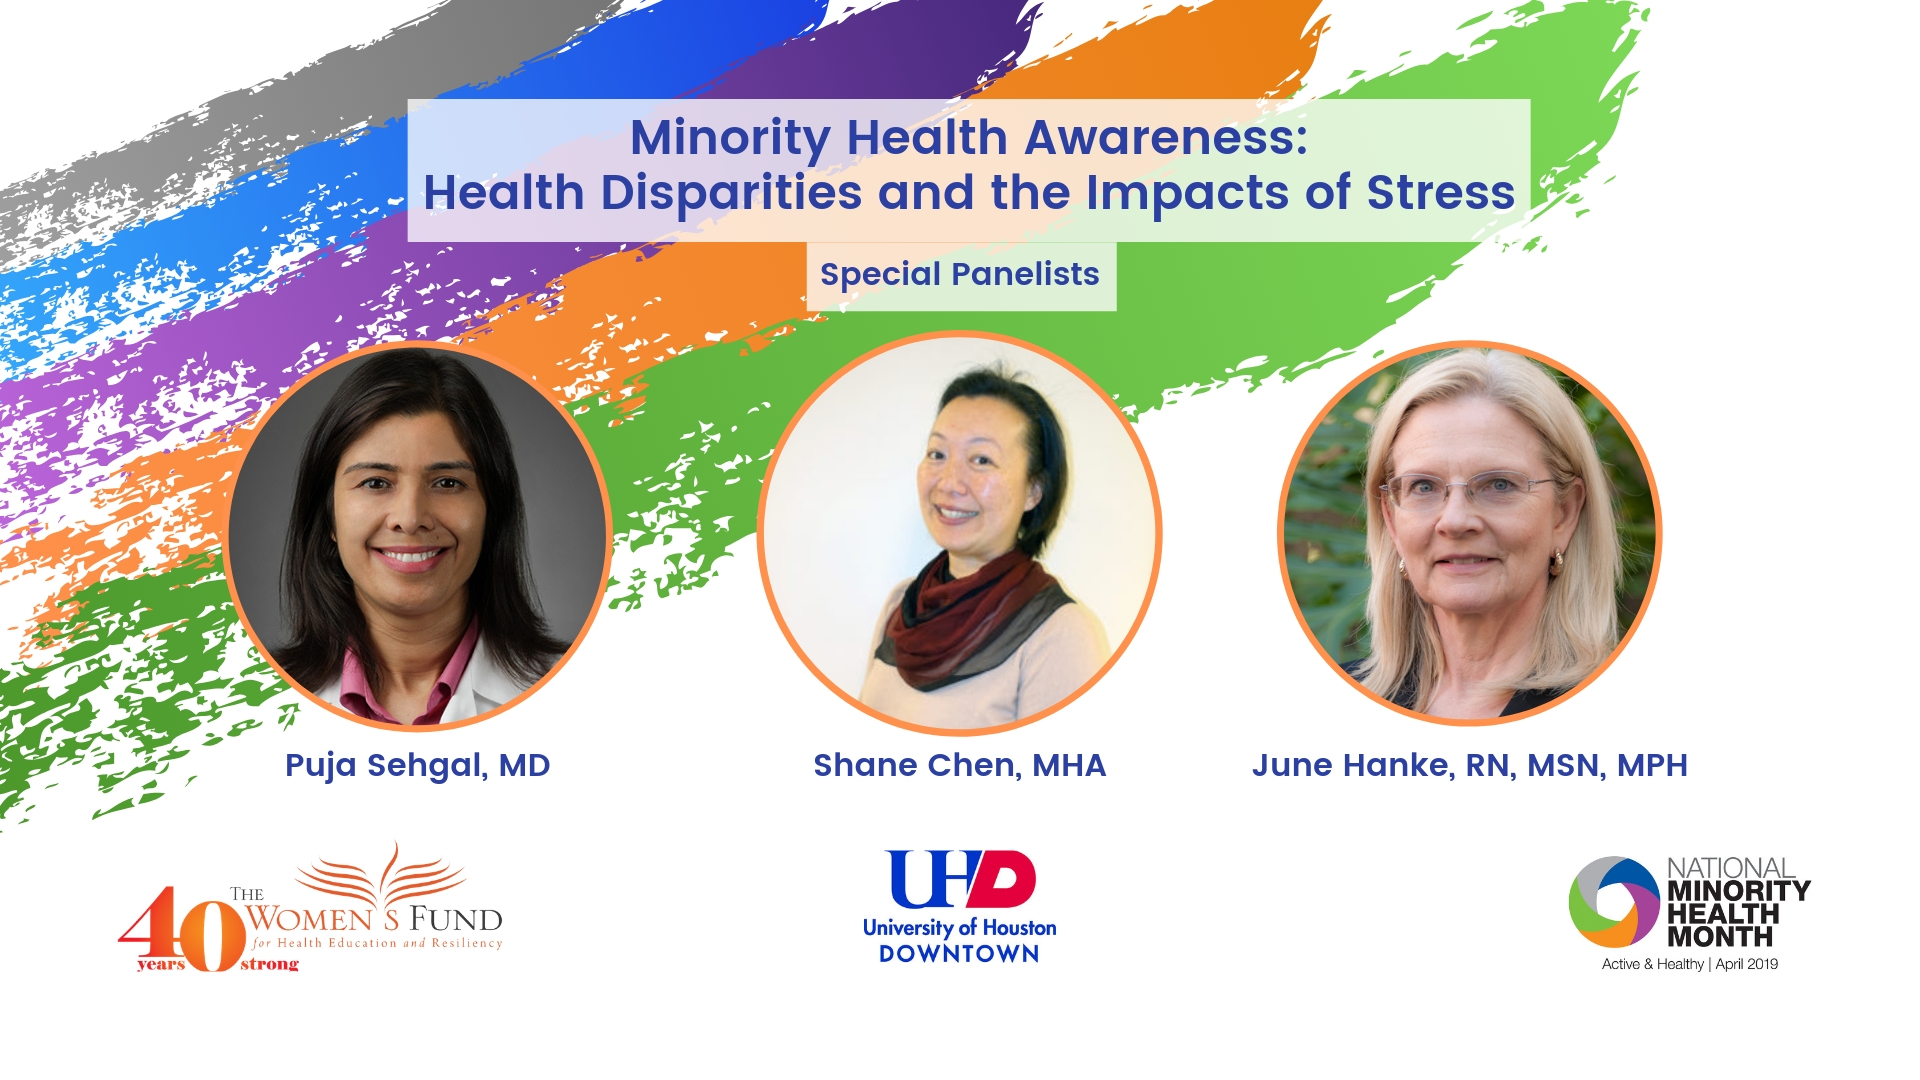 Minority Health Awareness: Health Disparities and the Impacts of Stress